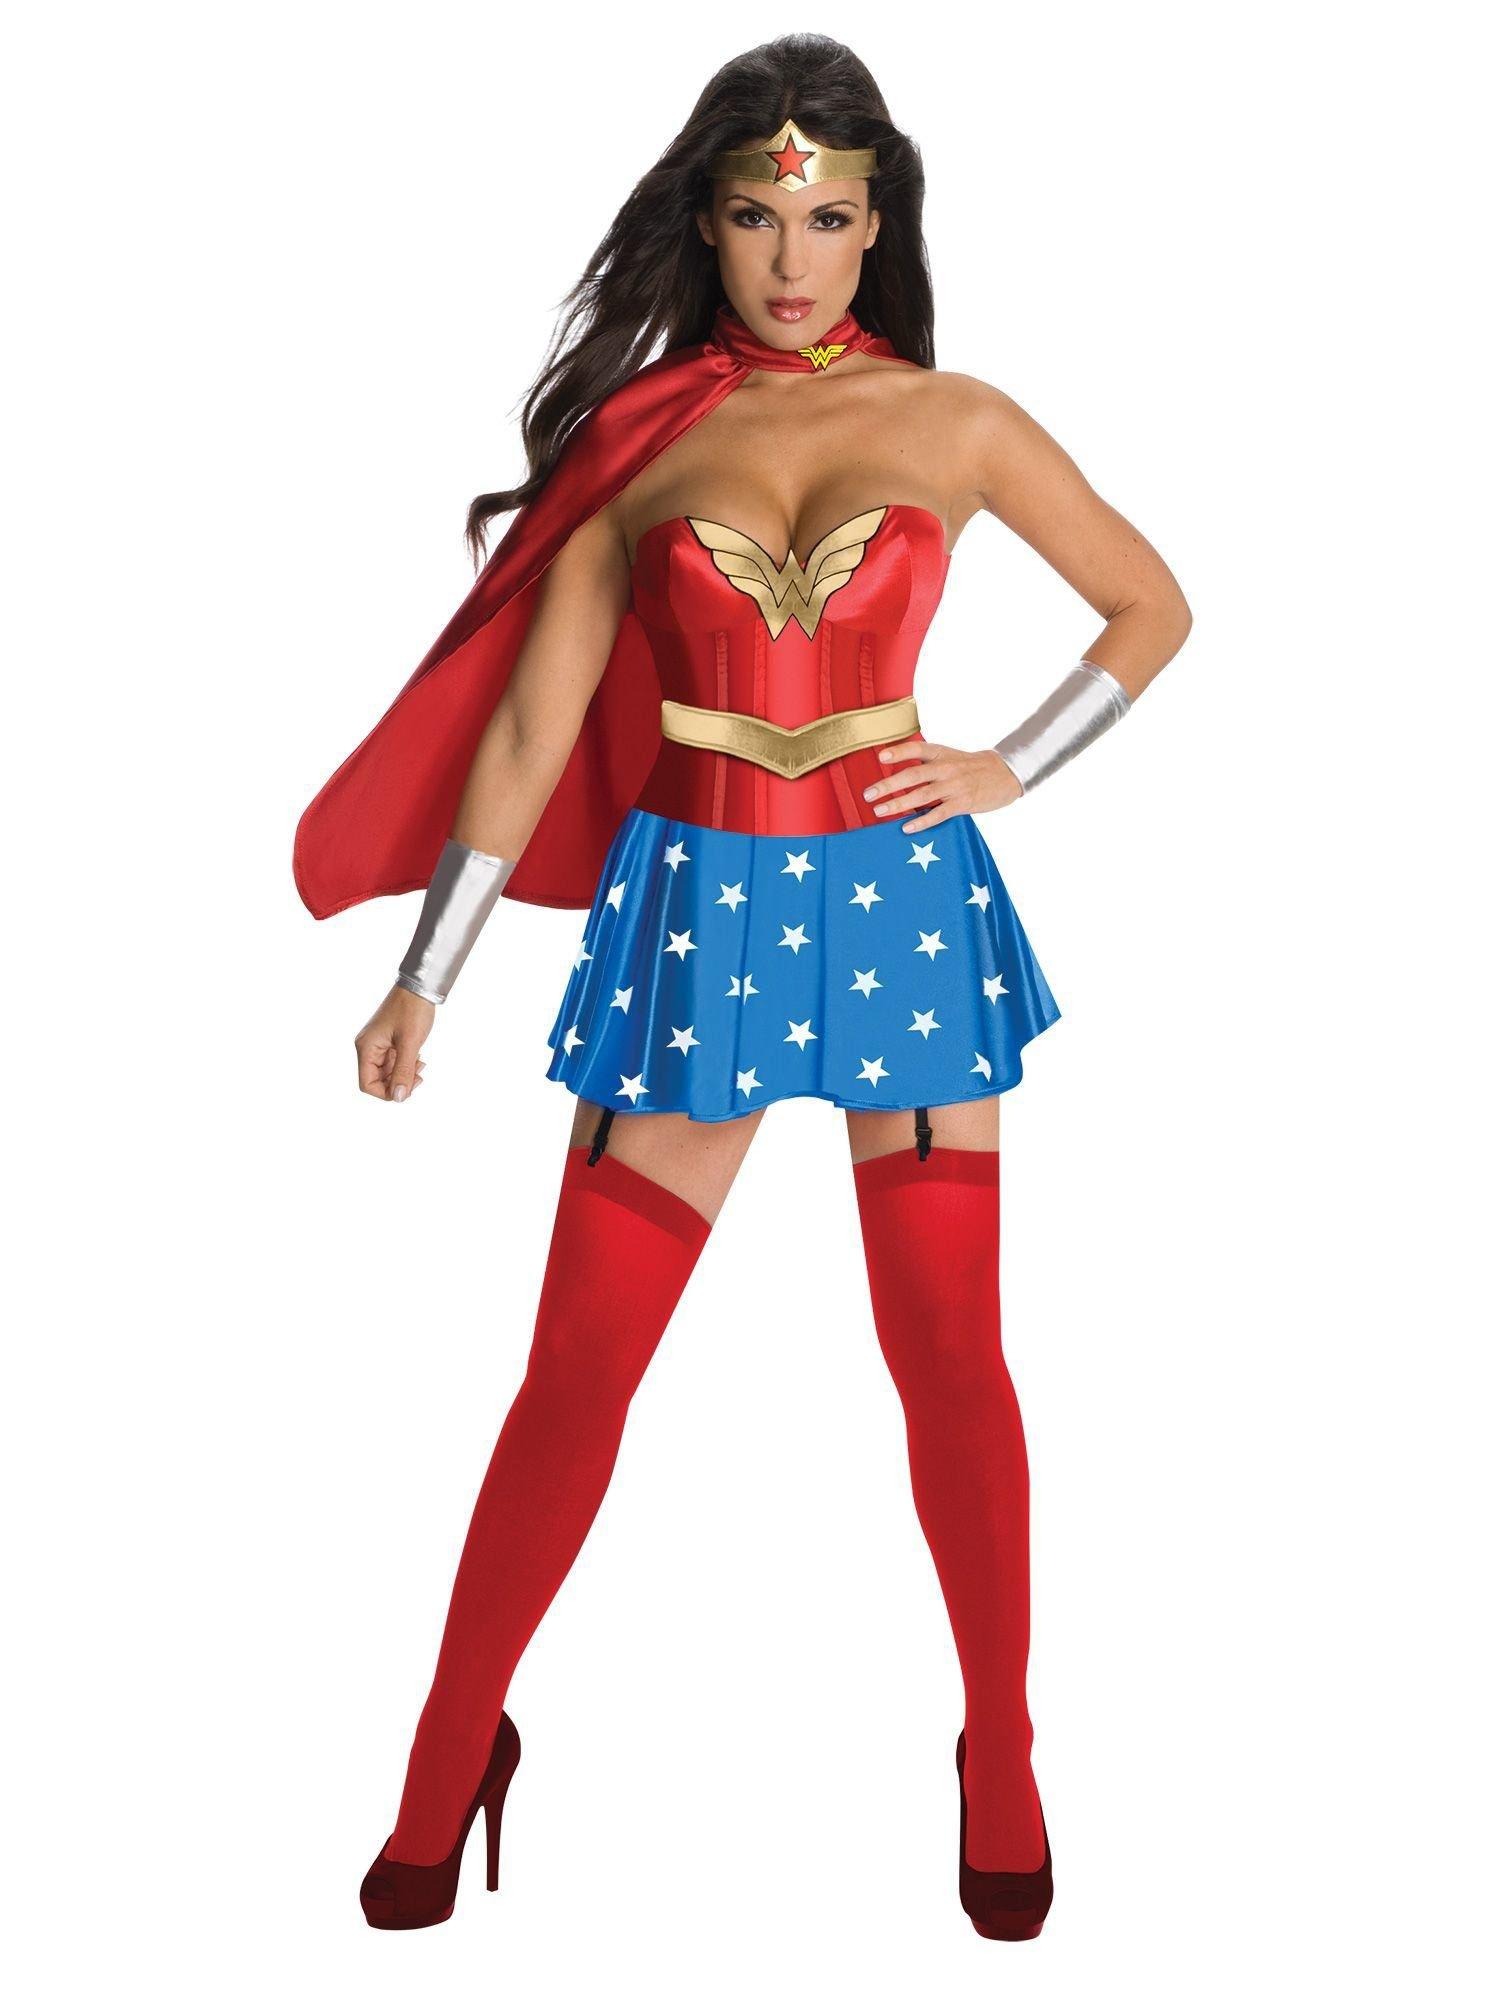 DC Comics Wonder Woman Corset Costume, Size: Large, Rubie's Costume Company